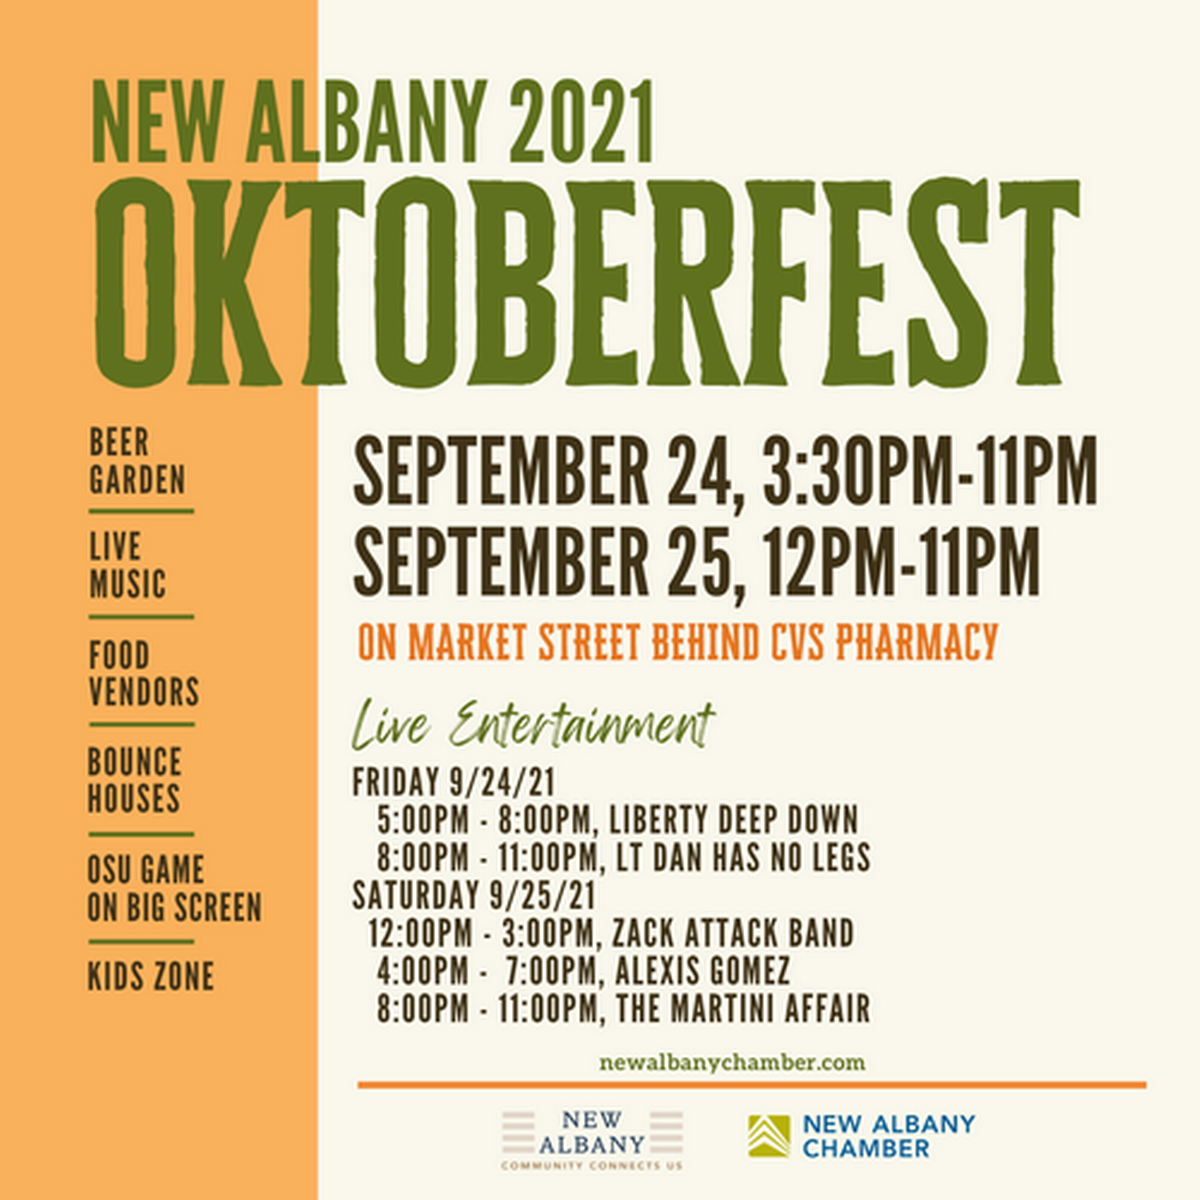 Oktoberfest - Sep 24, 2021 to Sep 25, 2021